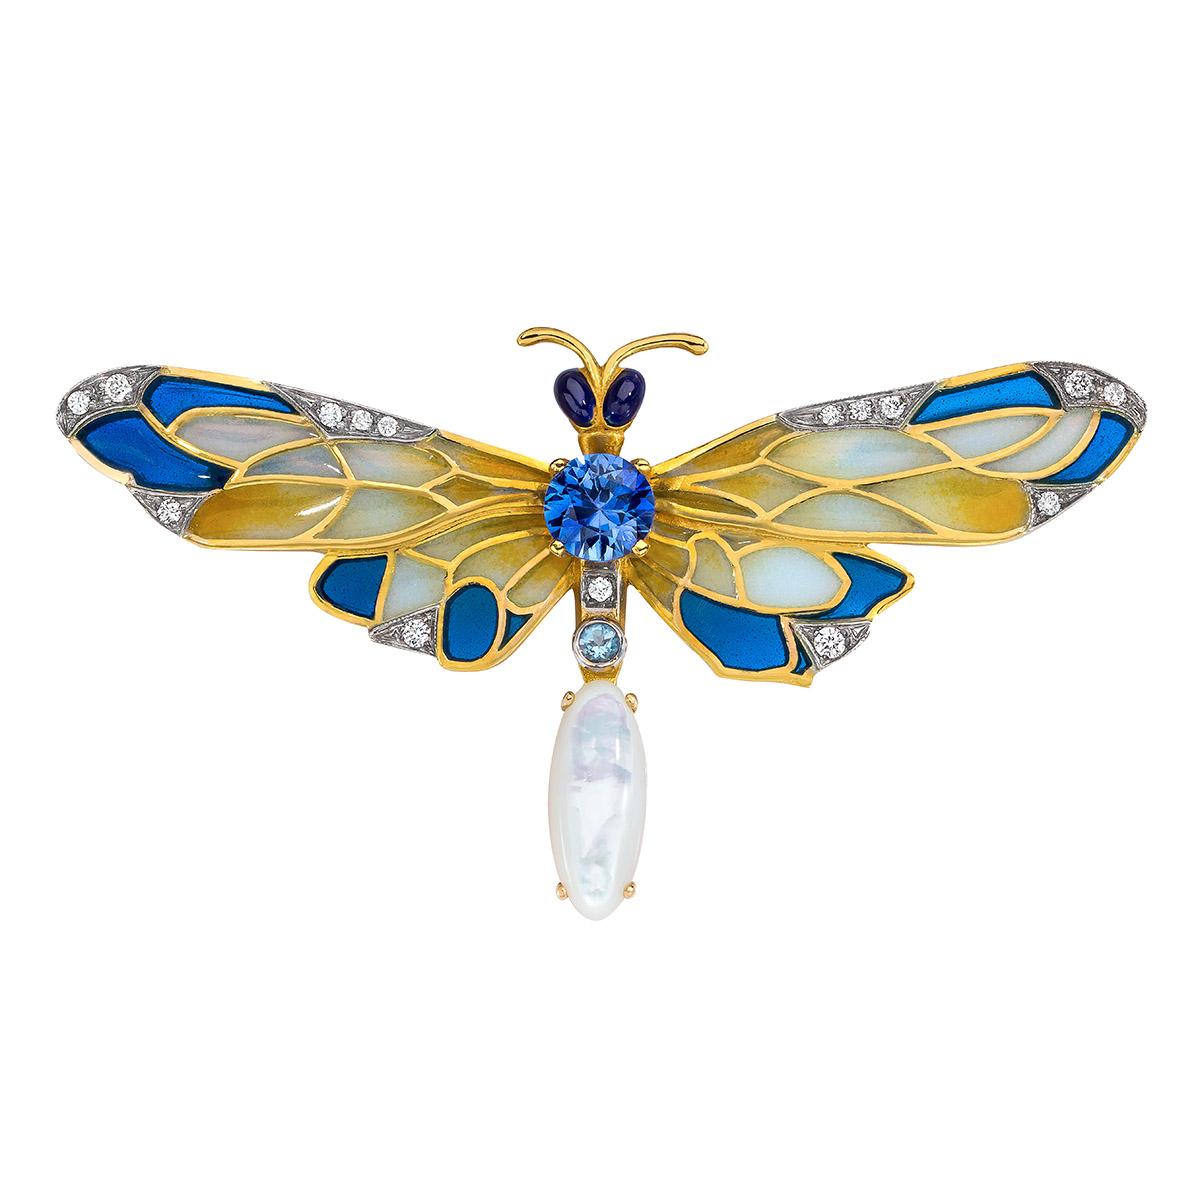 Art Nouveau Masriera 18 Karat Gold Enamel, Diamond and Precious Stone Dragonfly Brooch